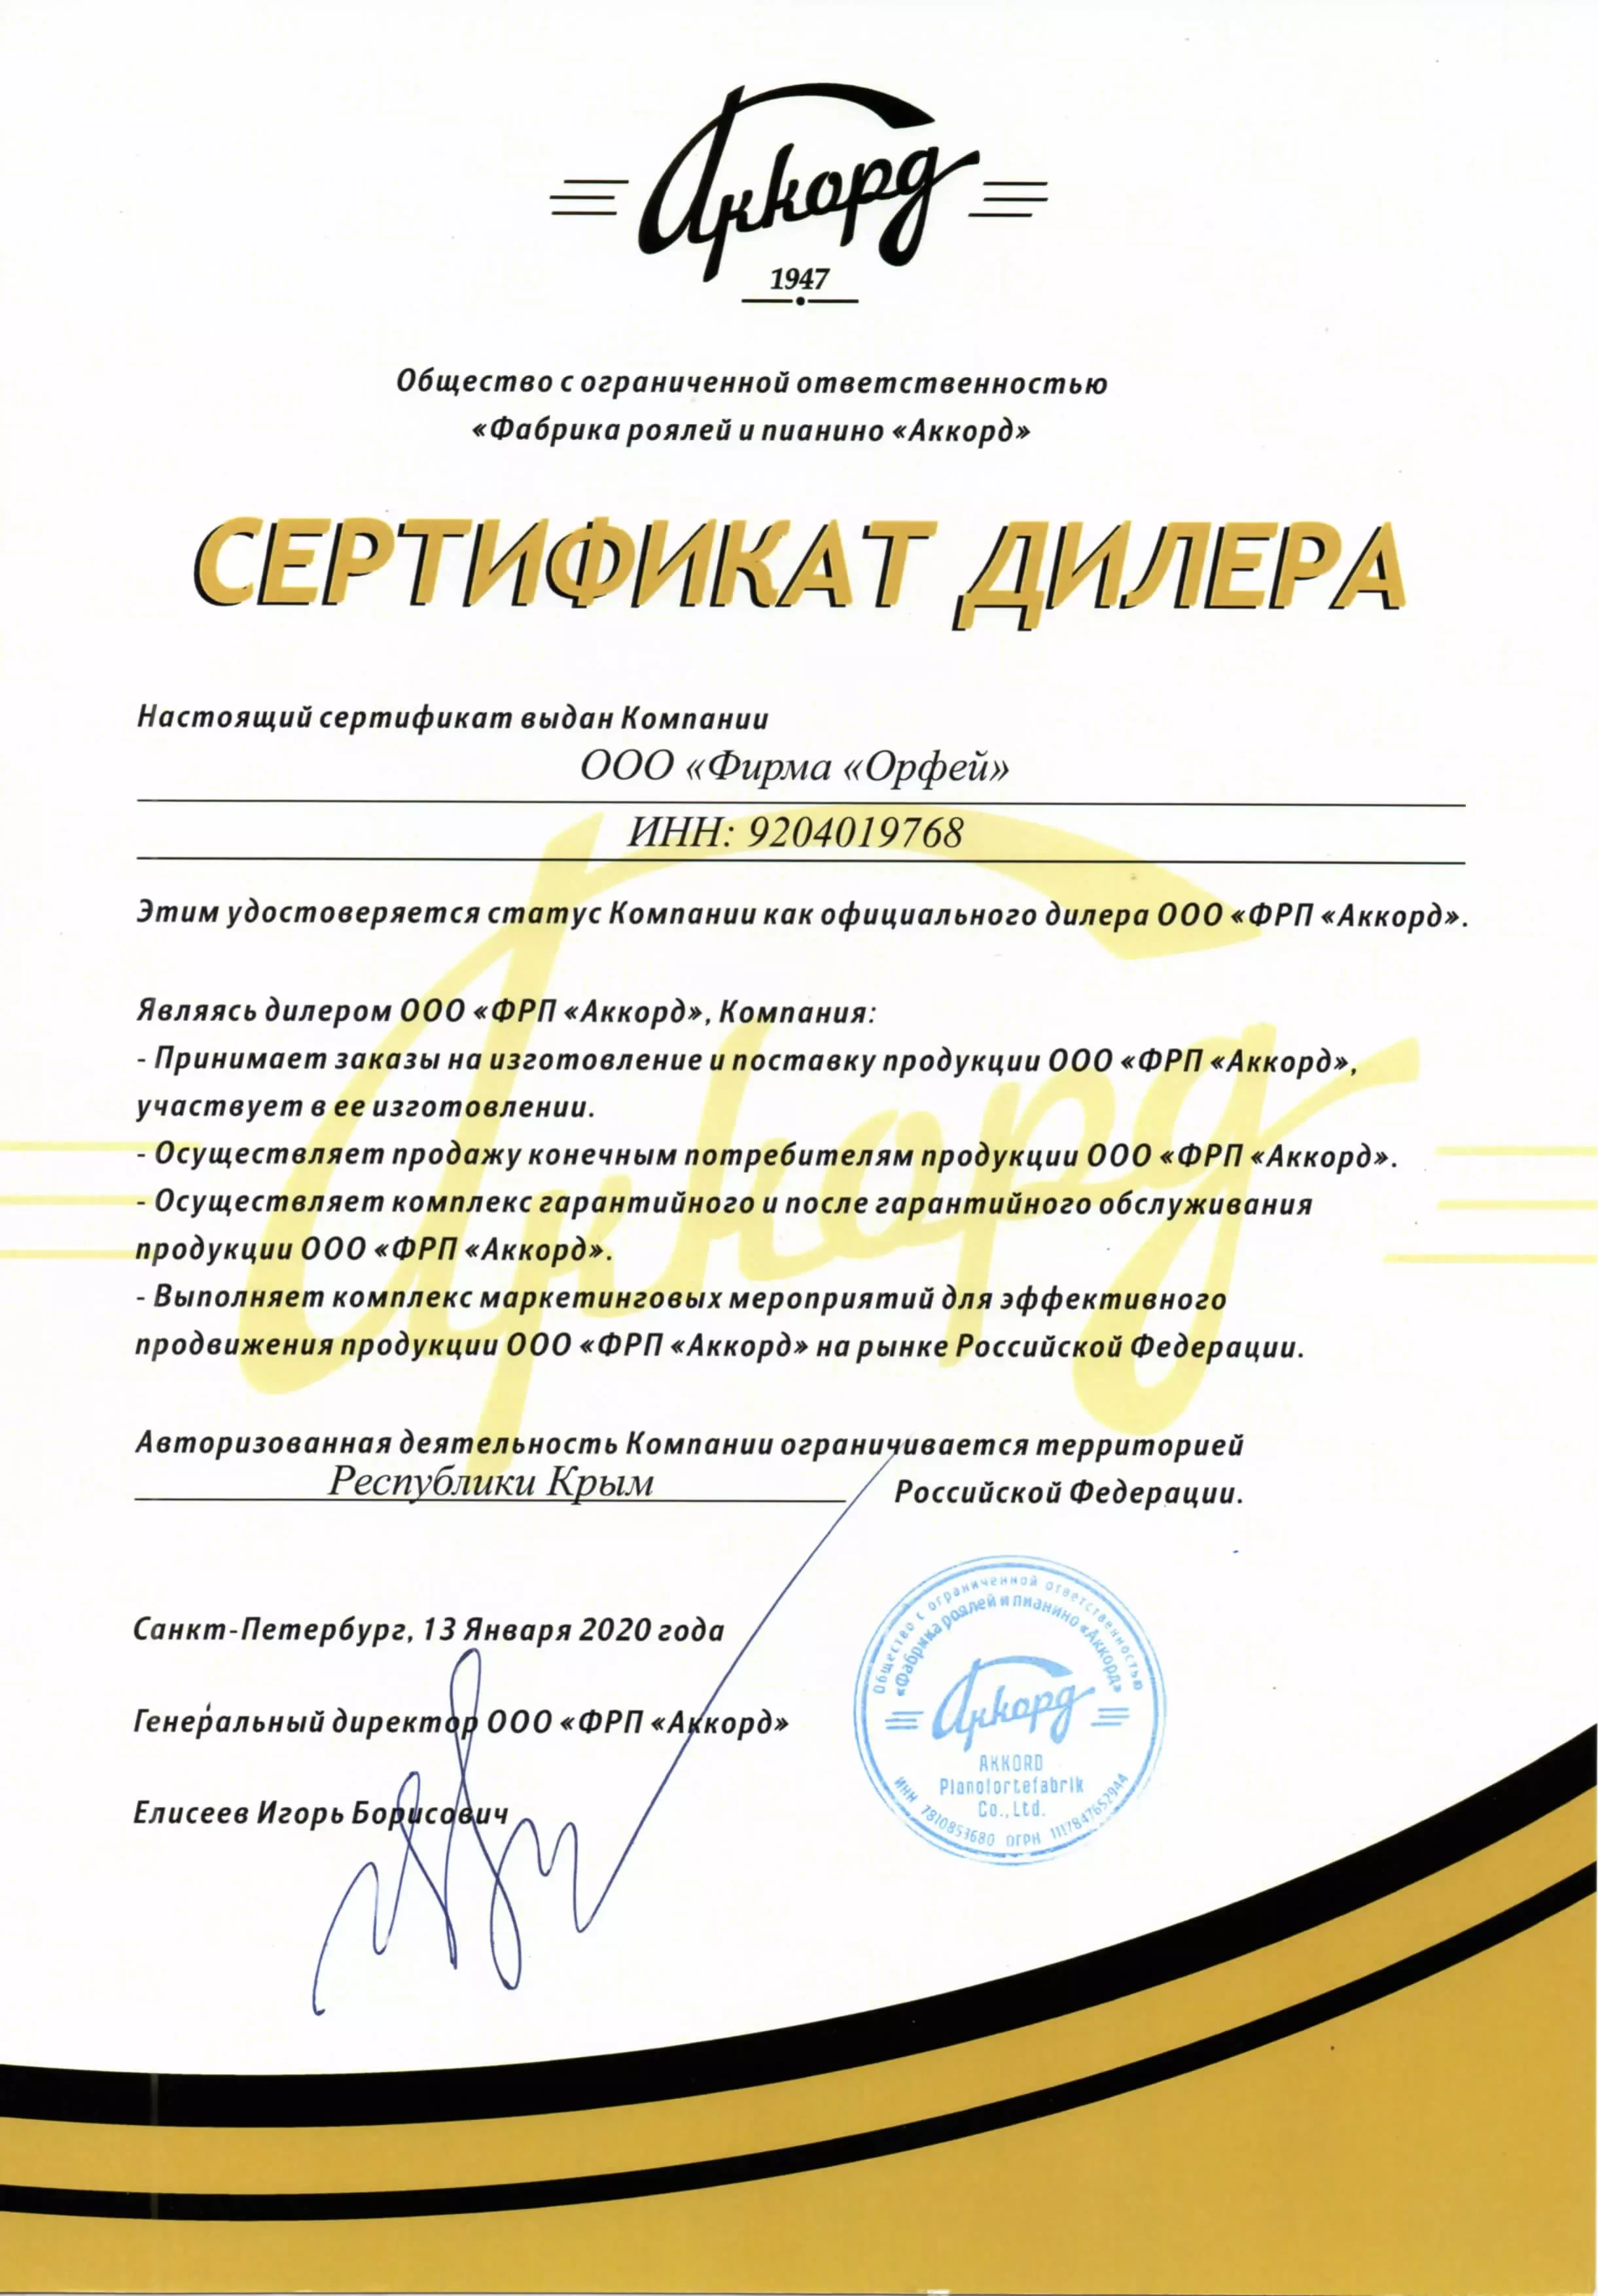 Сертификат дилера "Аккорд"